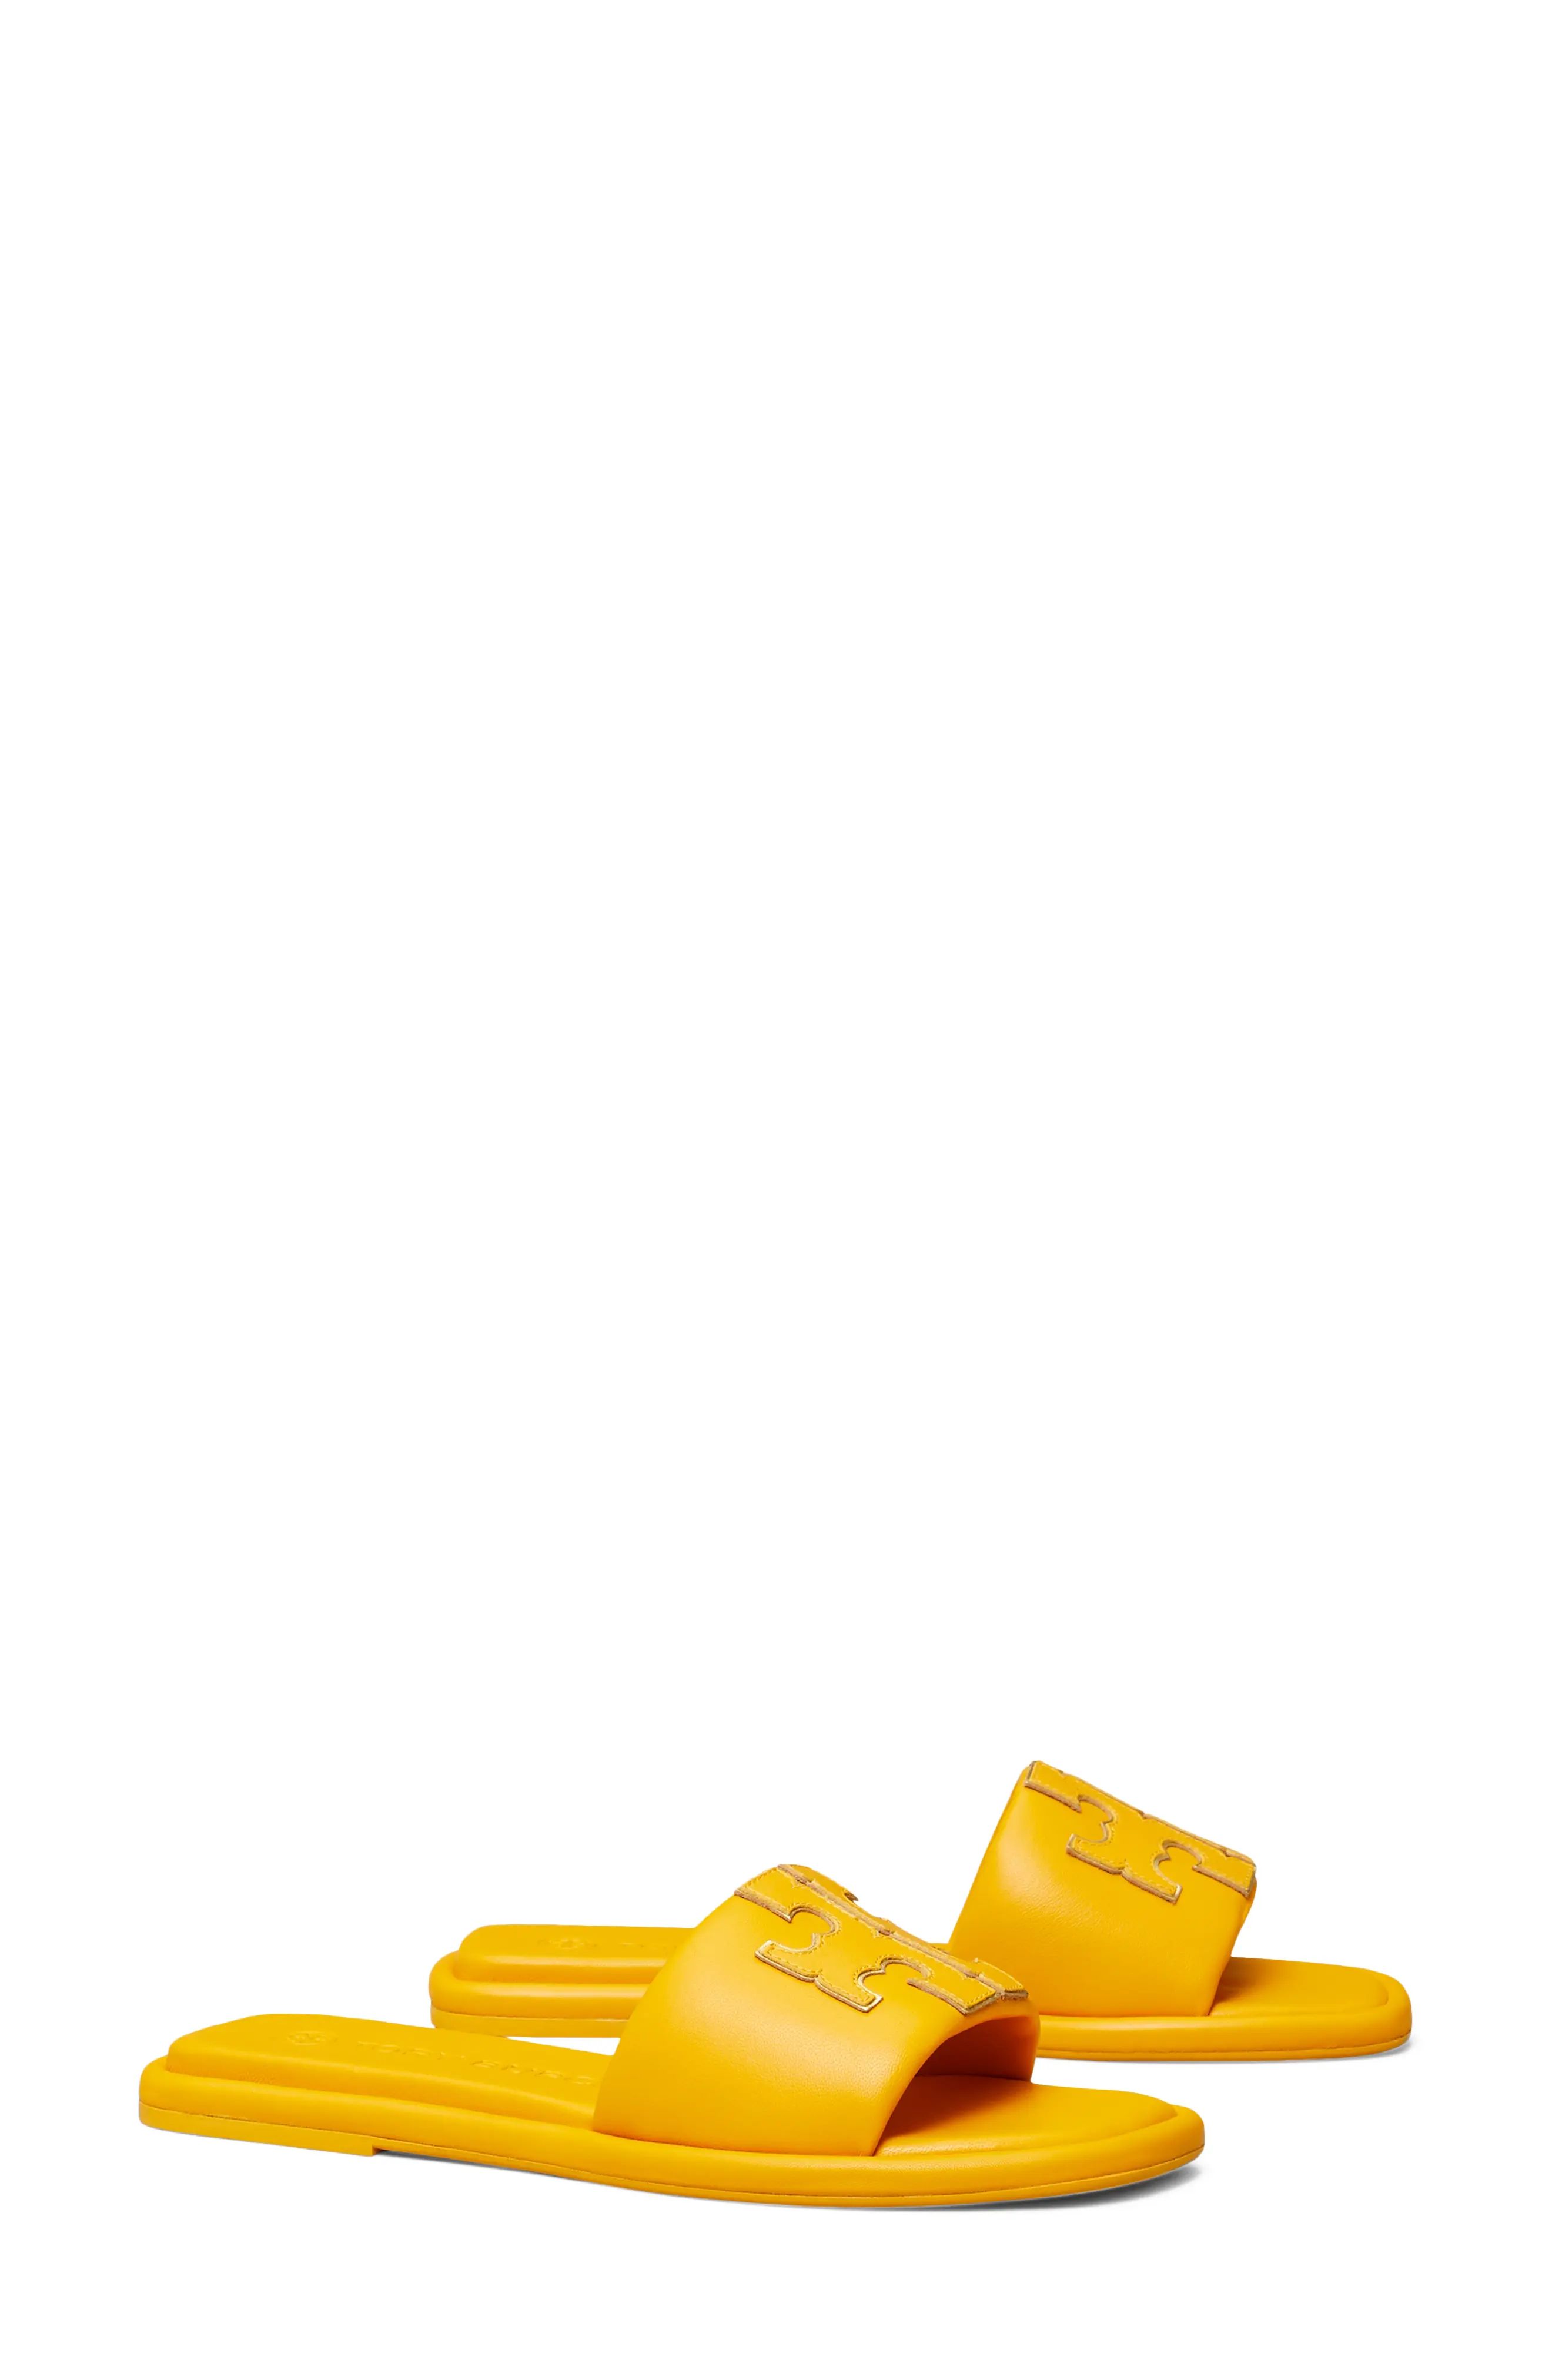 Tory Burch Double T Sport Slide Sandal in Golden Crest /Gold at Nordstrom, Size 8.5 | Nordstrom